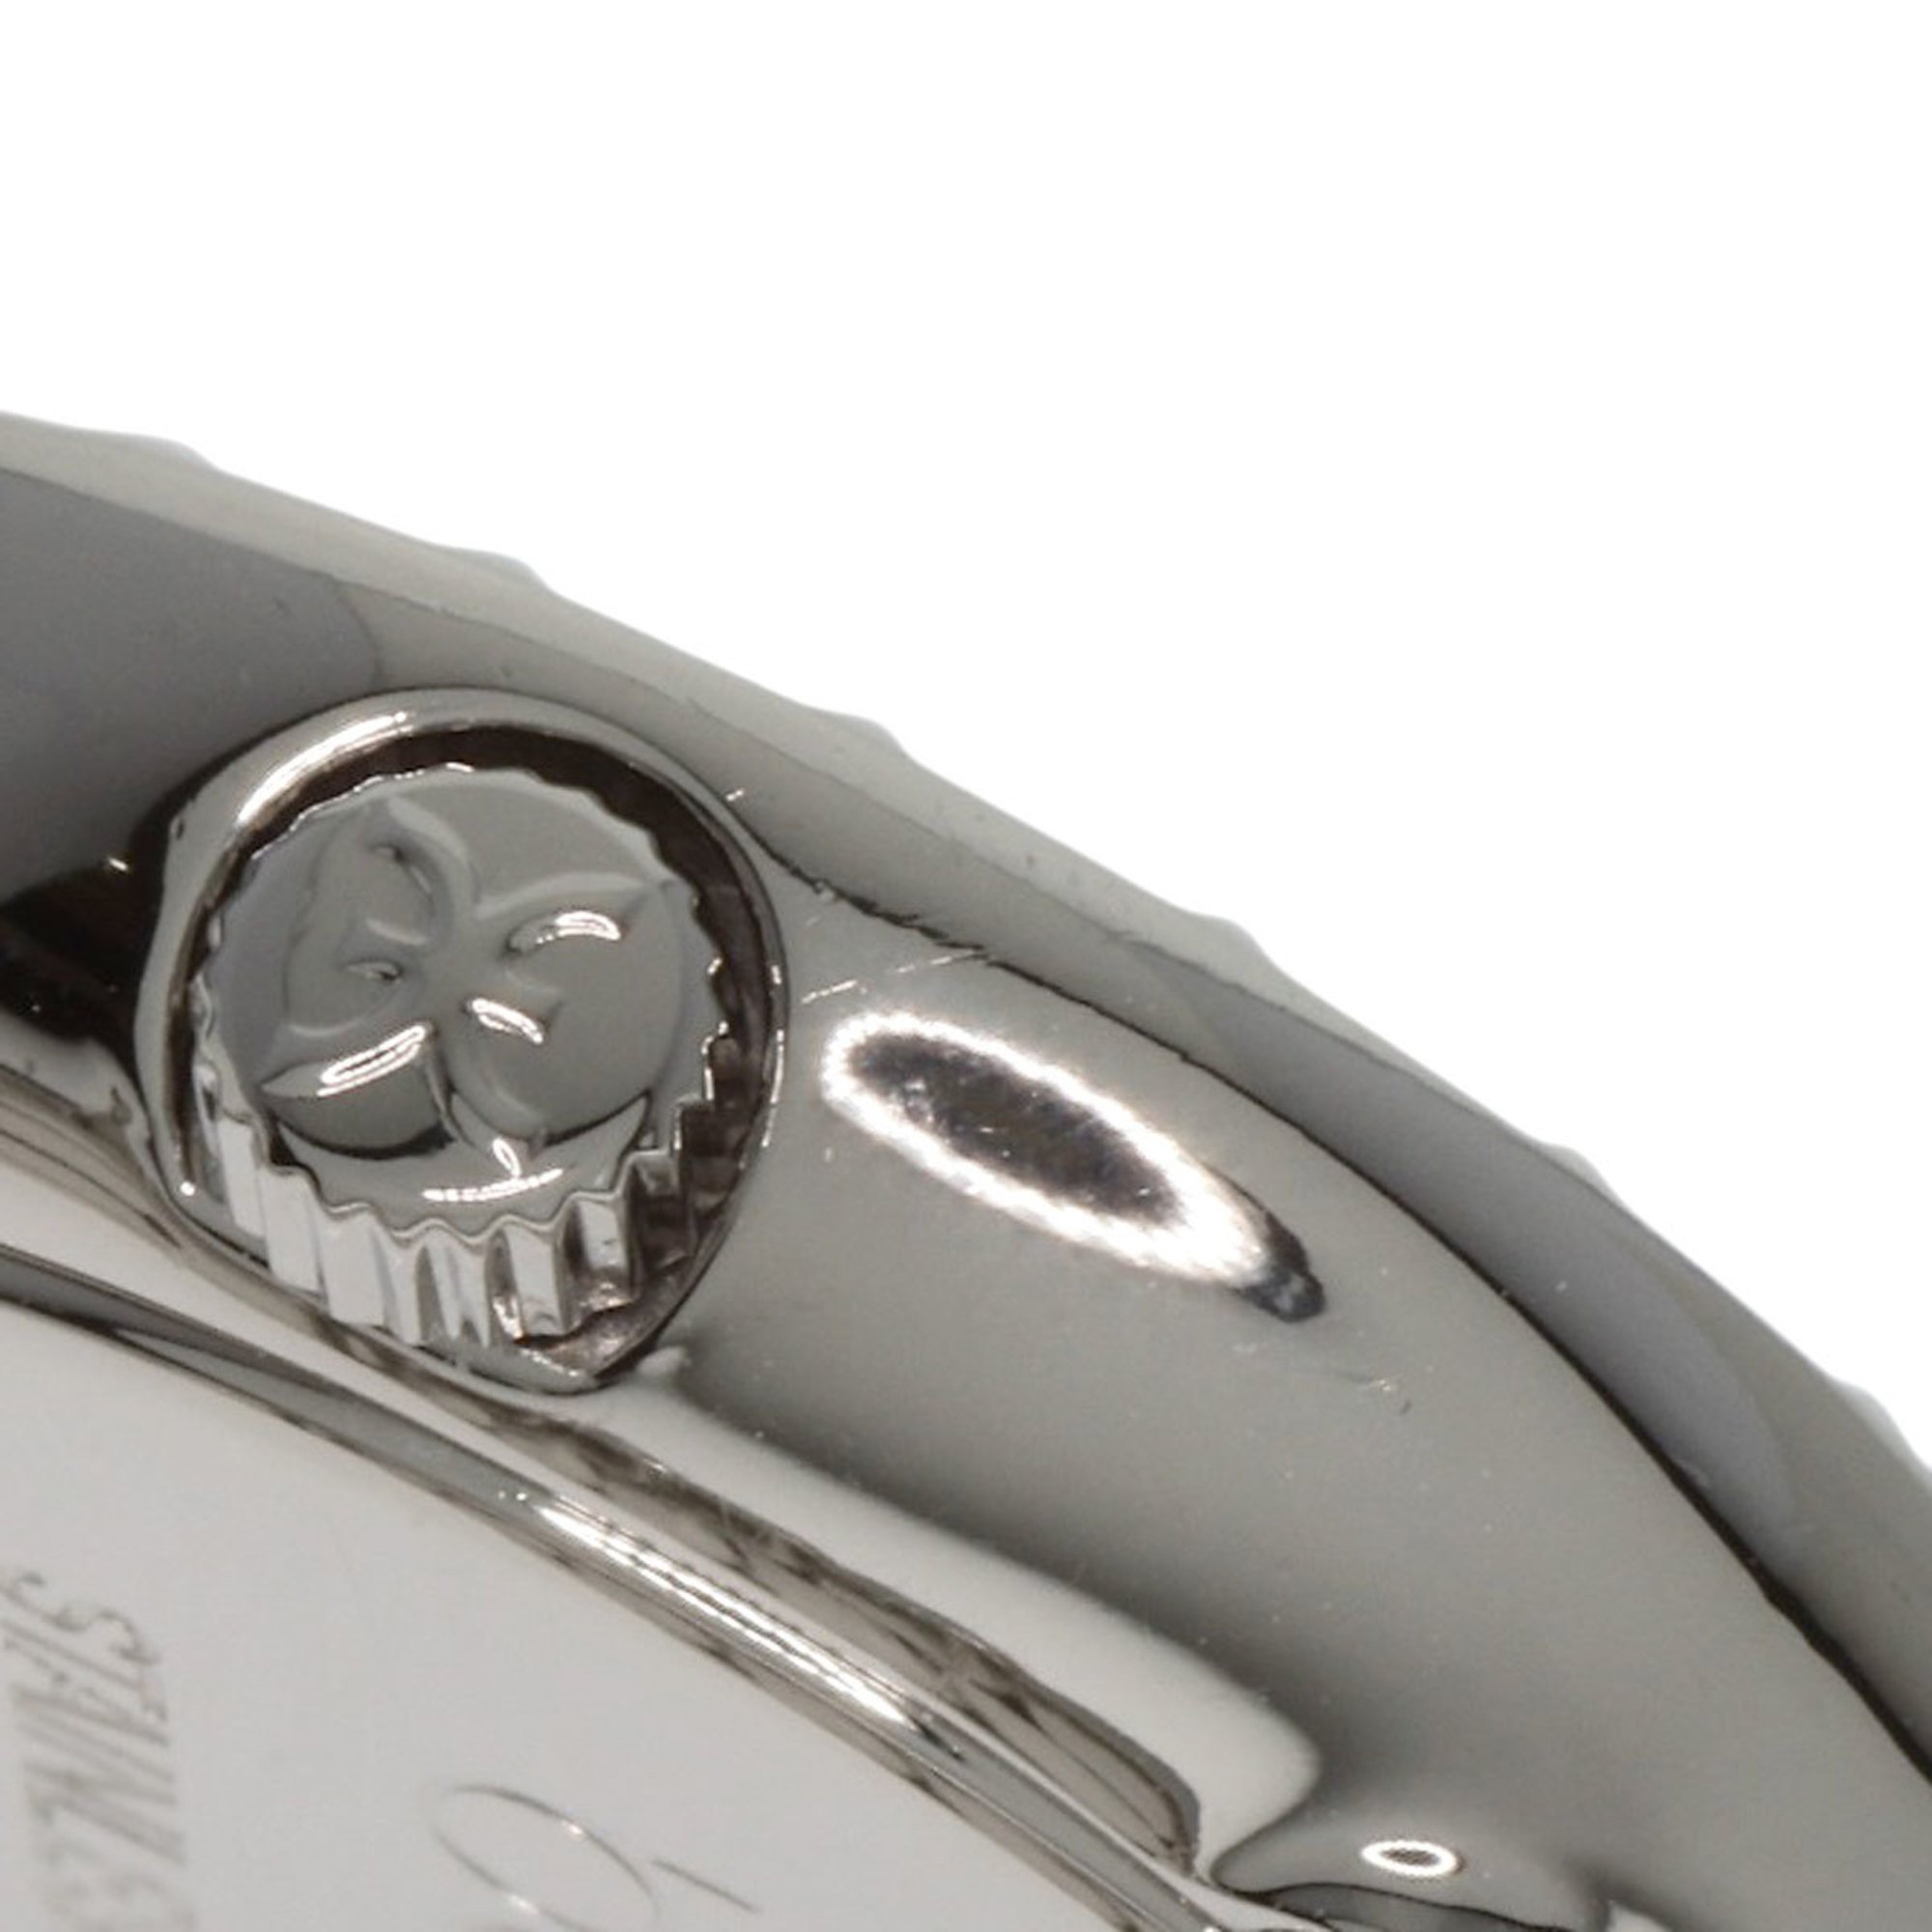 Ebel Beluga 8P Diamond Watch Stainless Steel/SS/Diamond Ladies EBEL